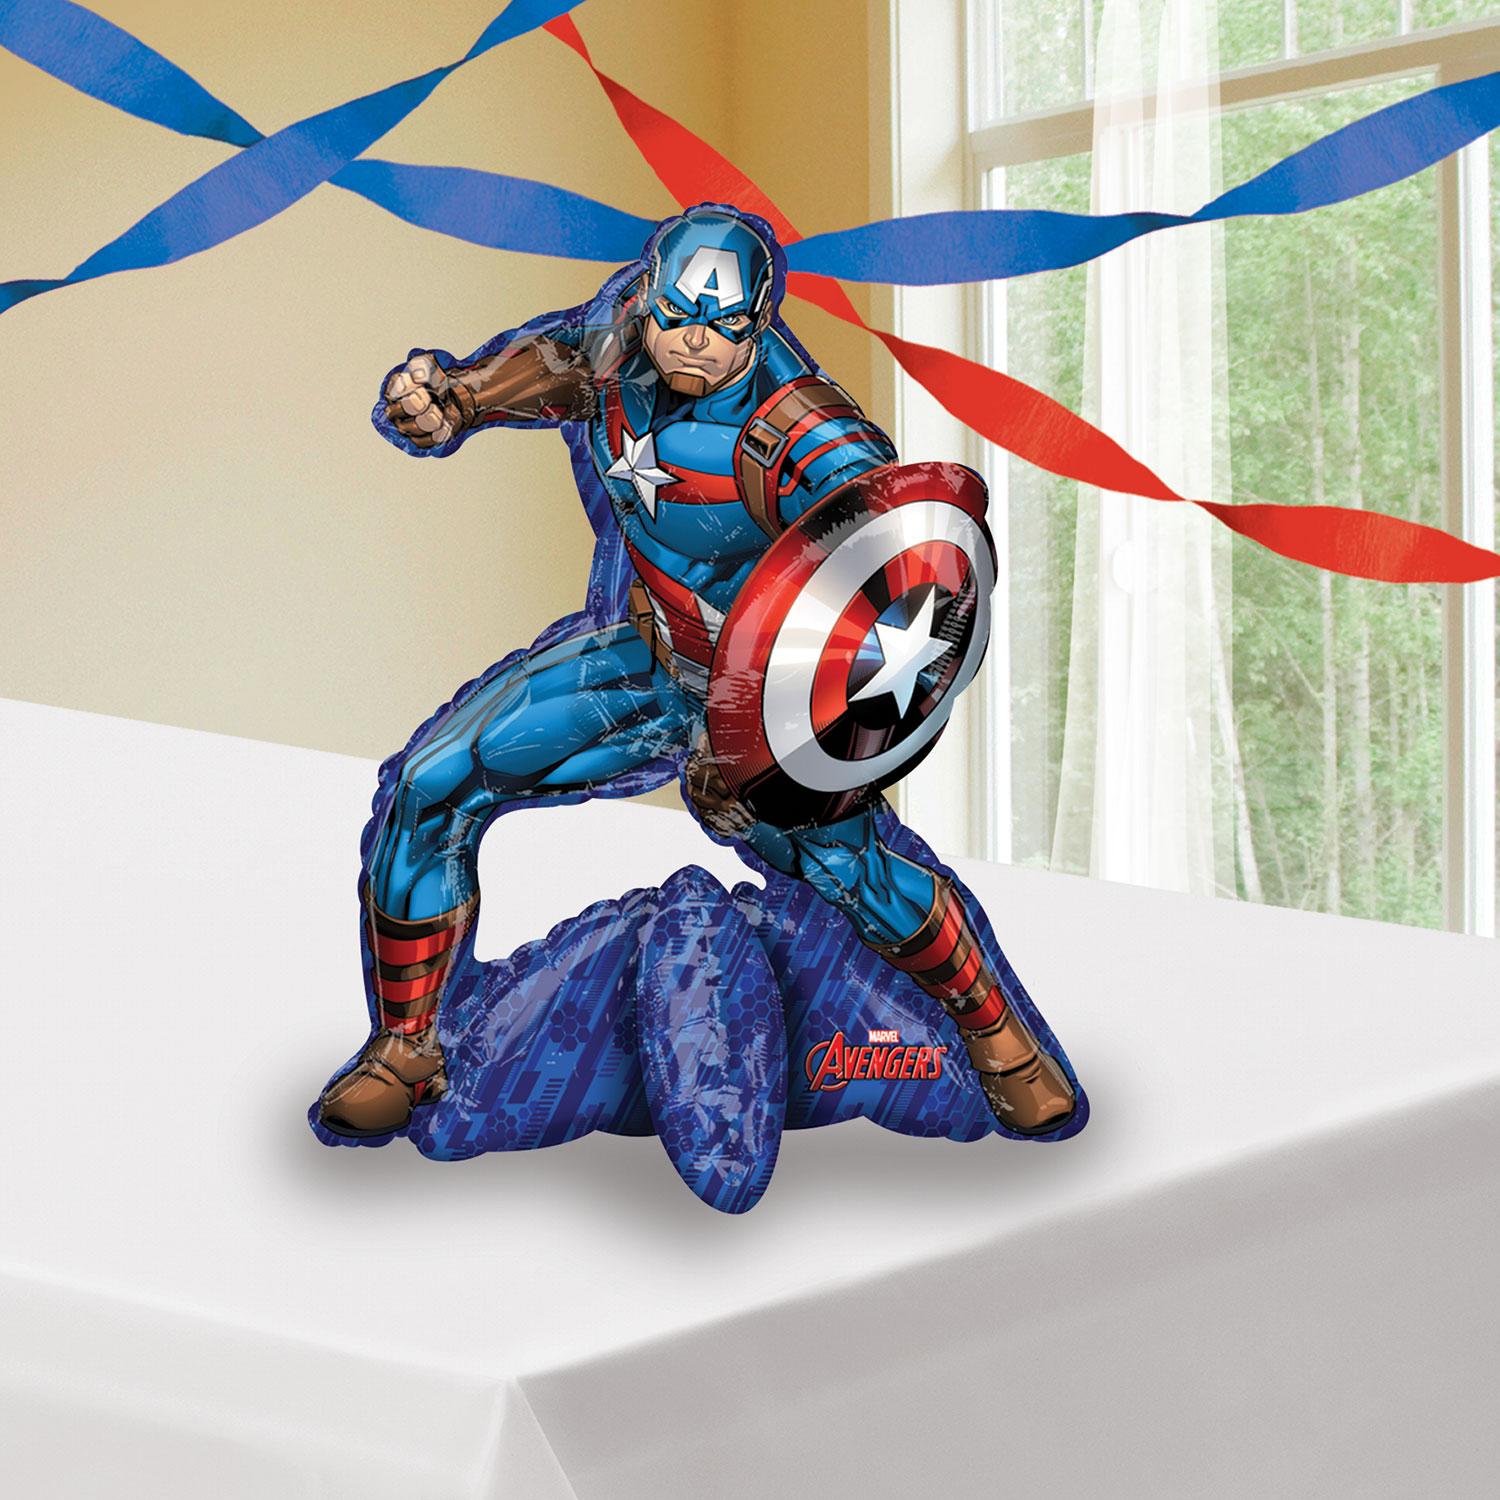 Avengers Captain America Air-filled Sitter Balloon